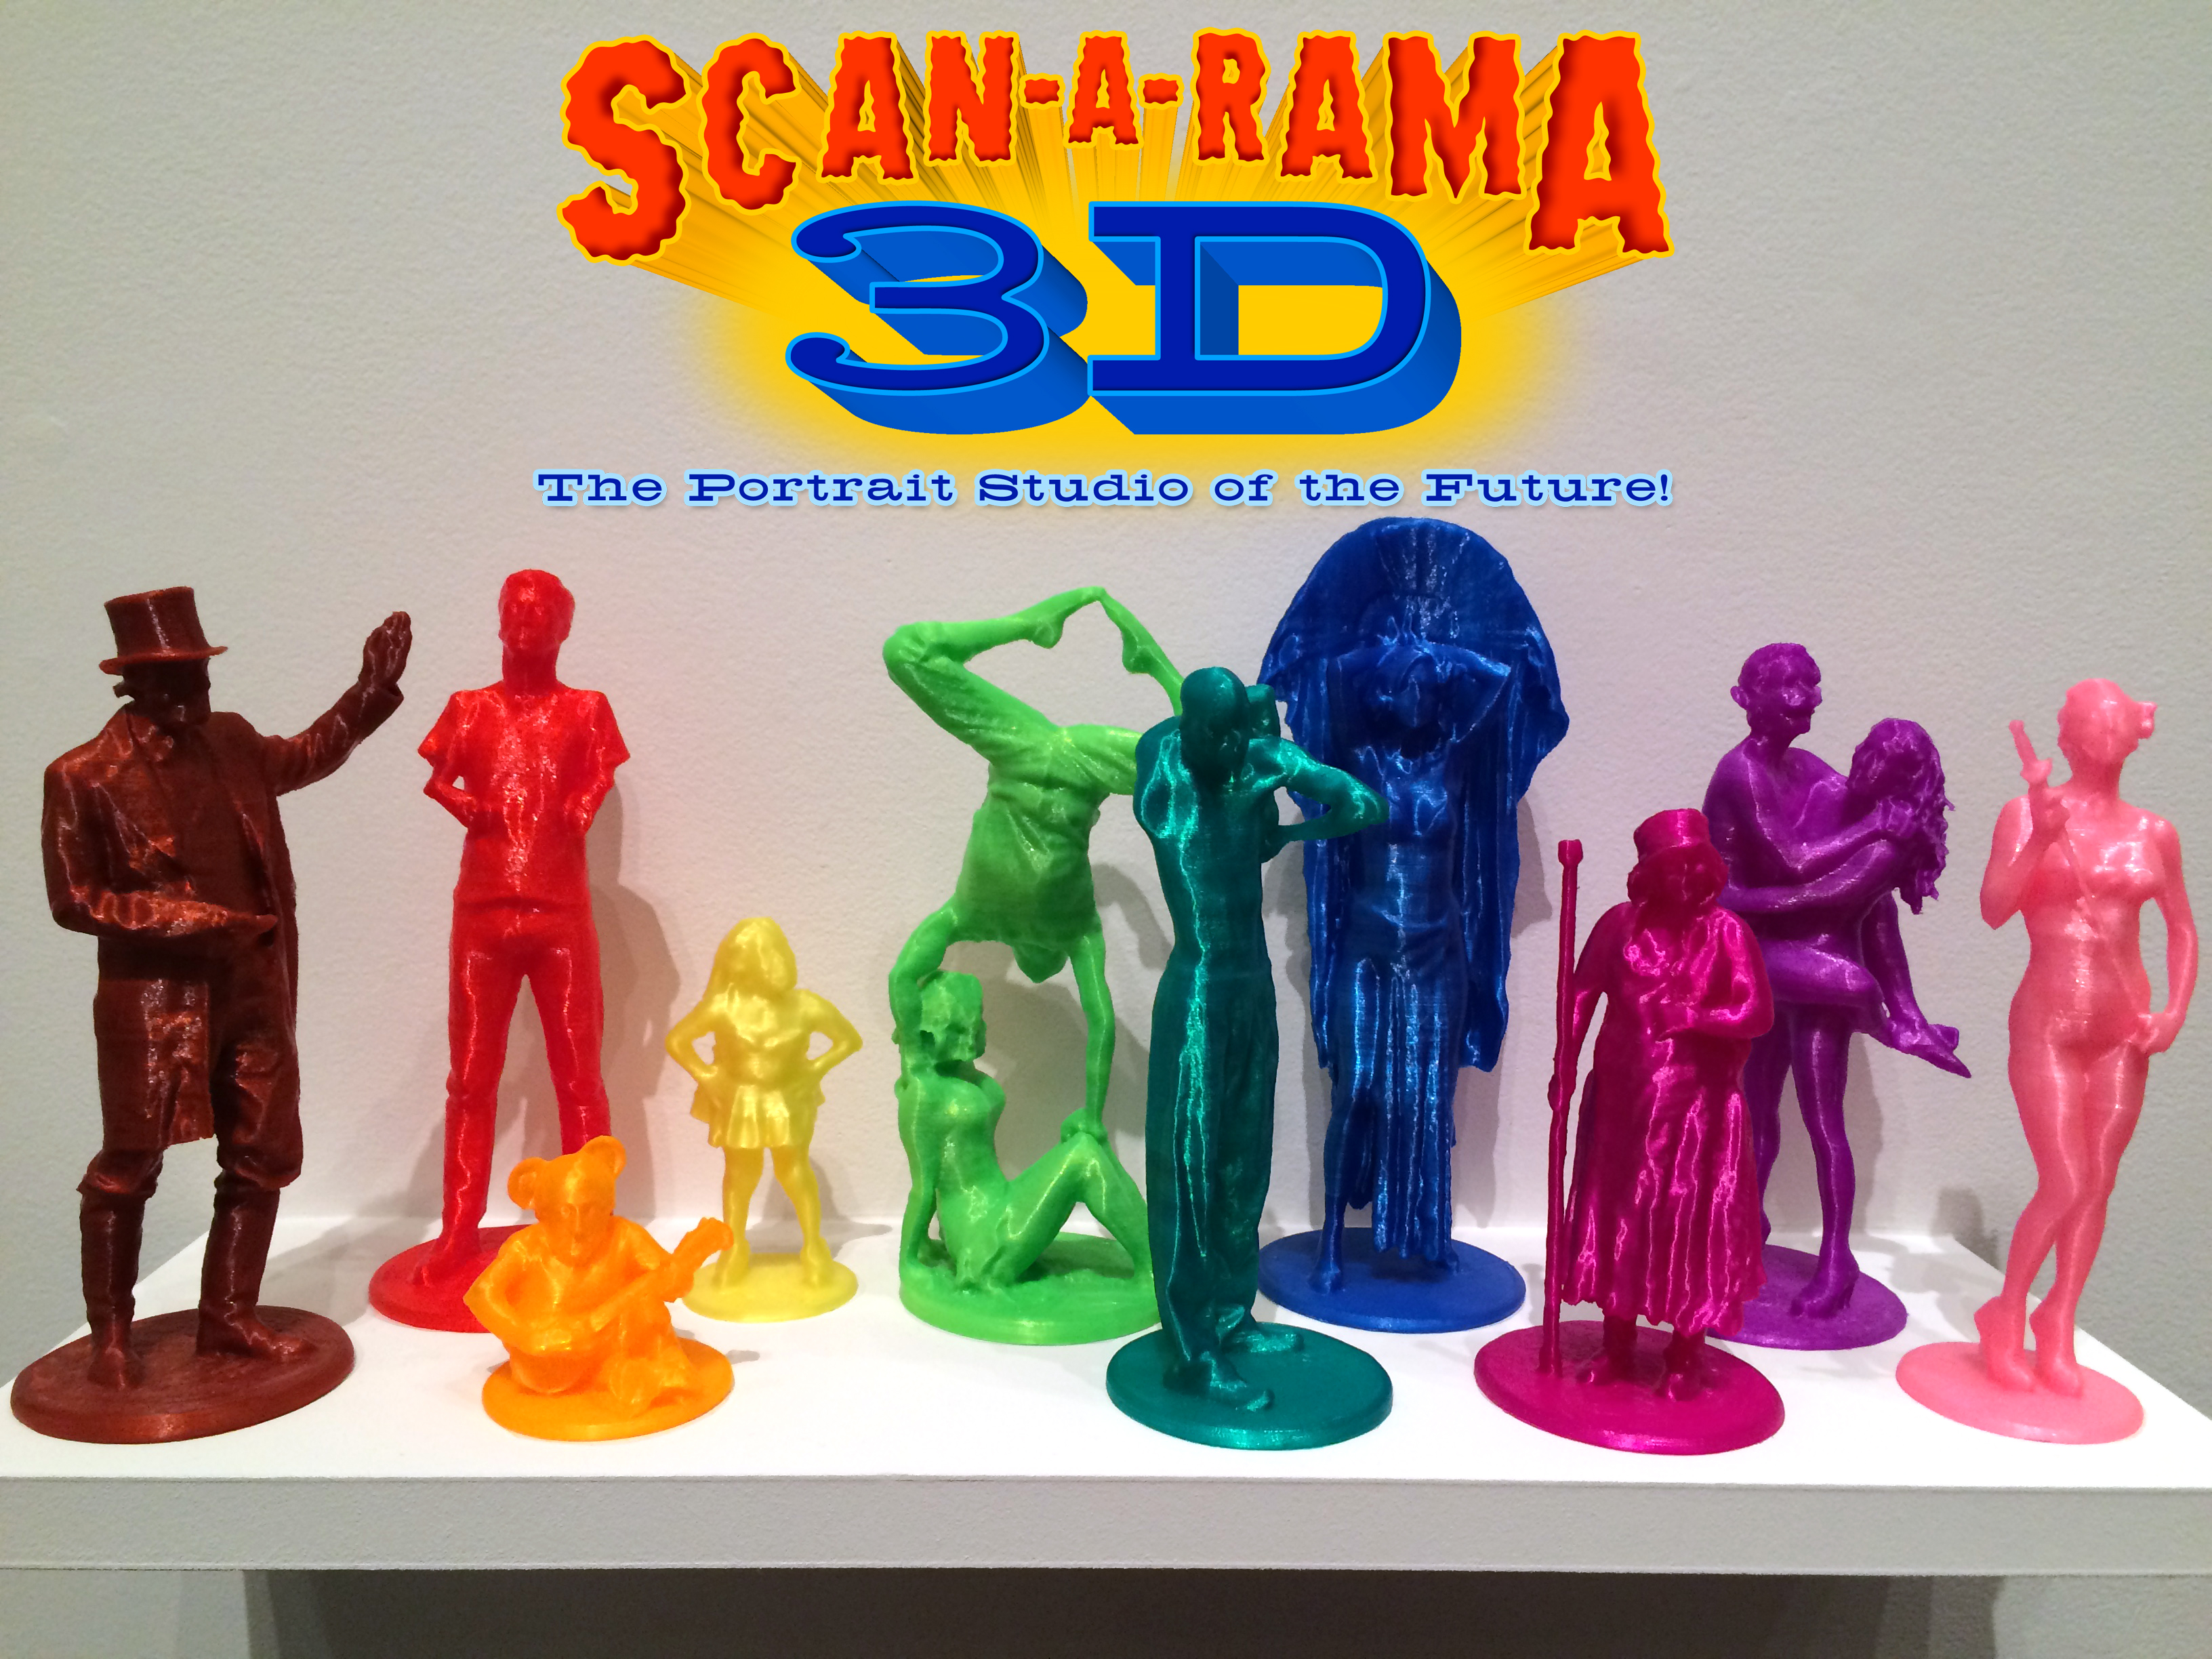 The Great Fredini's Scan-A-Rama 3D Portrait Studio